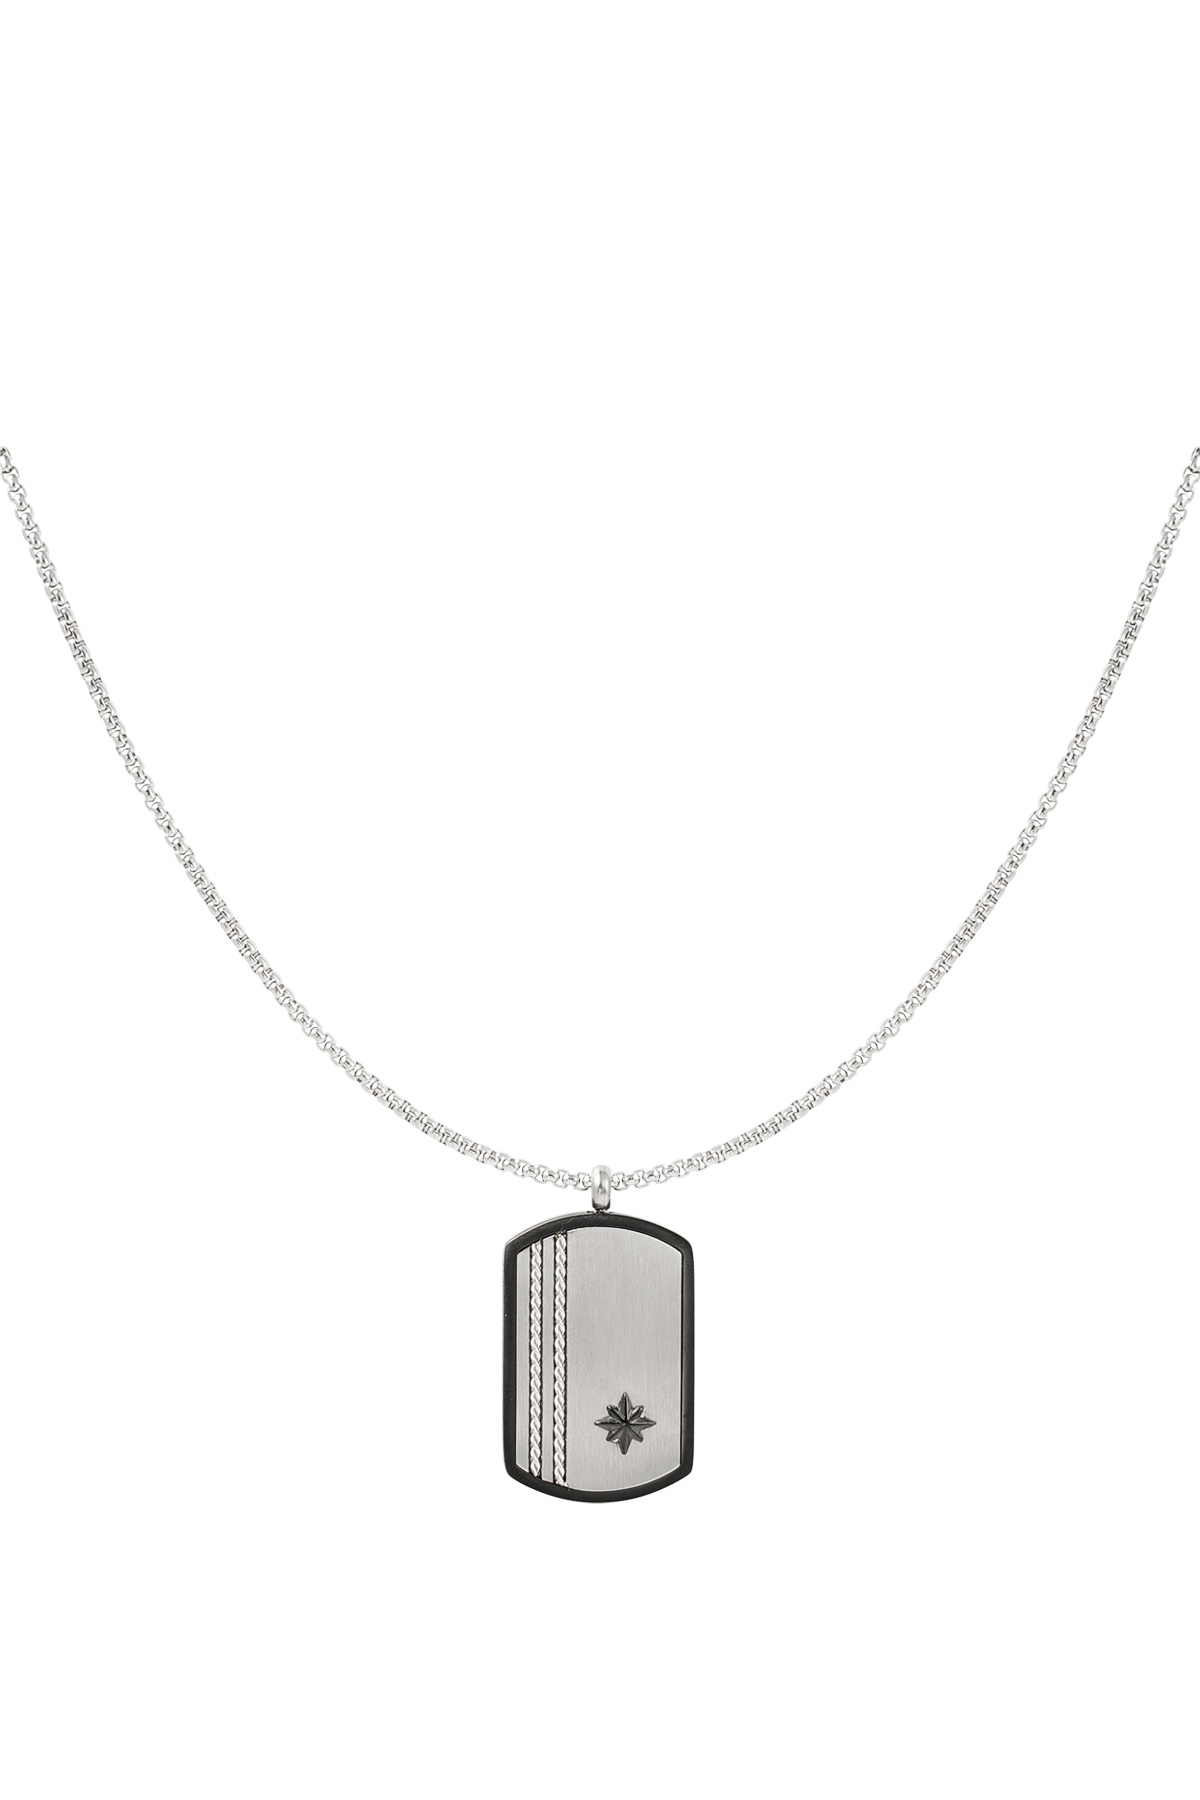 Men's necklace silver charm - silver h5 